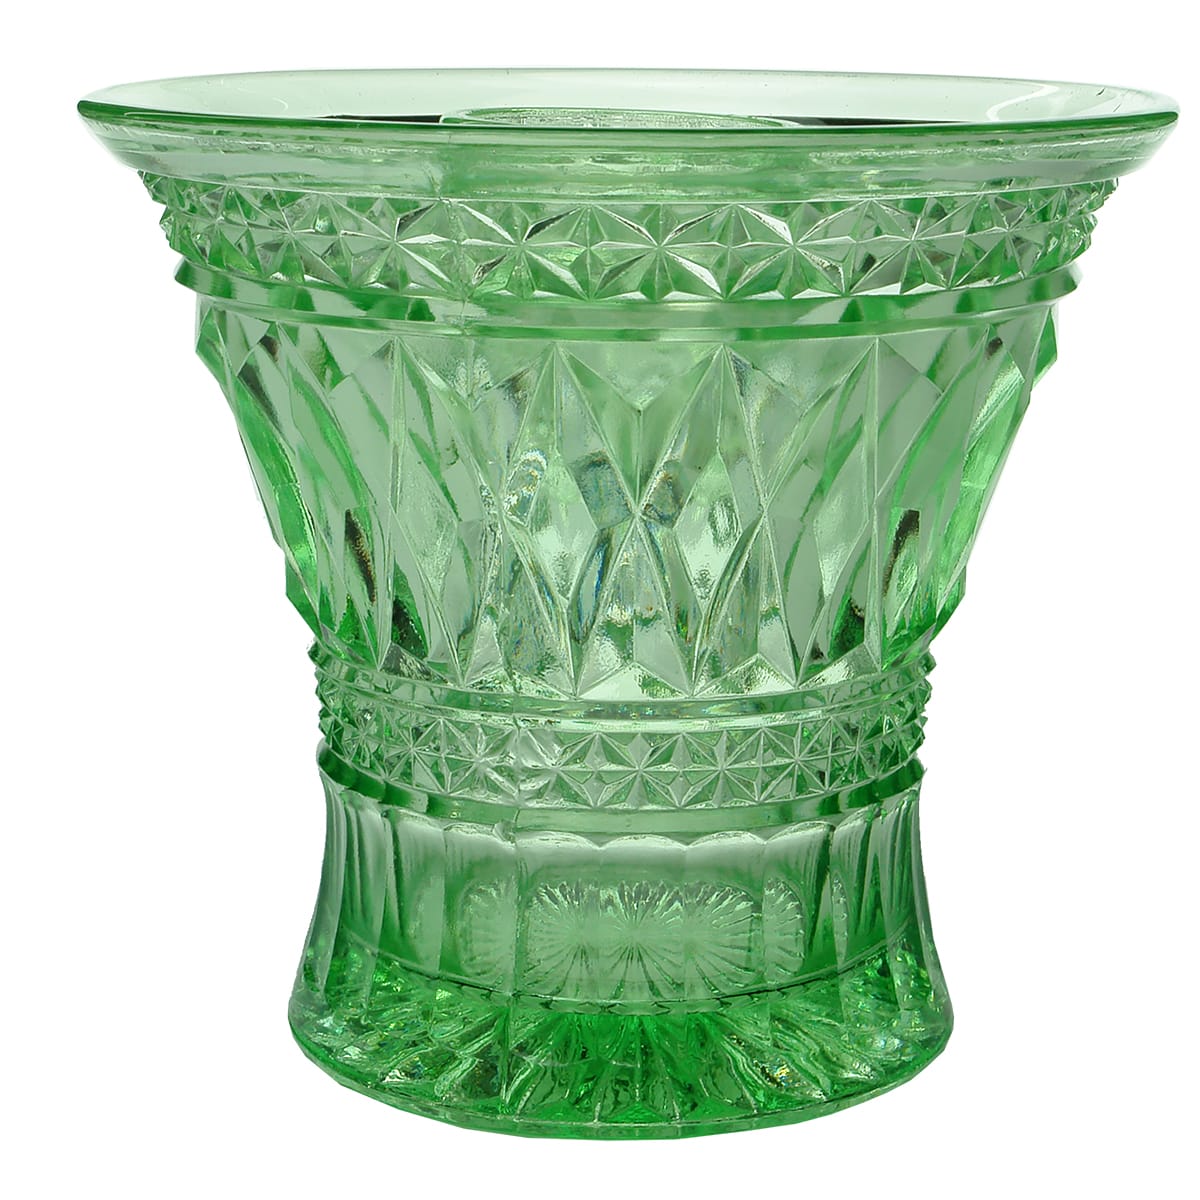 Glassware. Ornate green diamond pattern depression glass vase with frog.